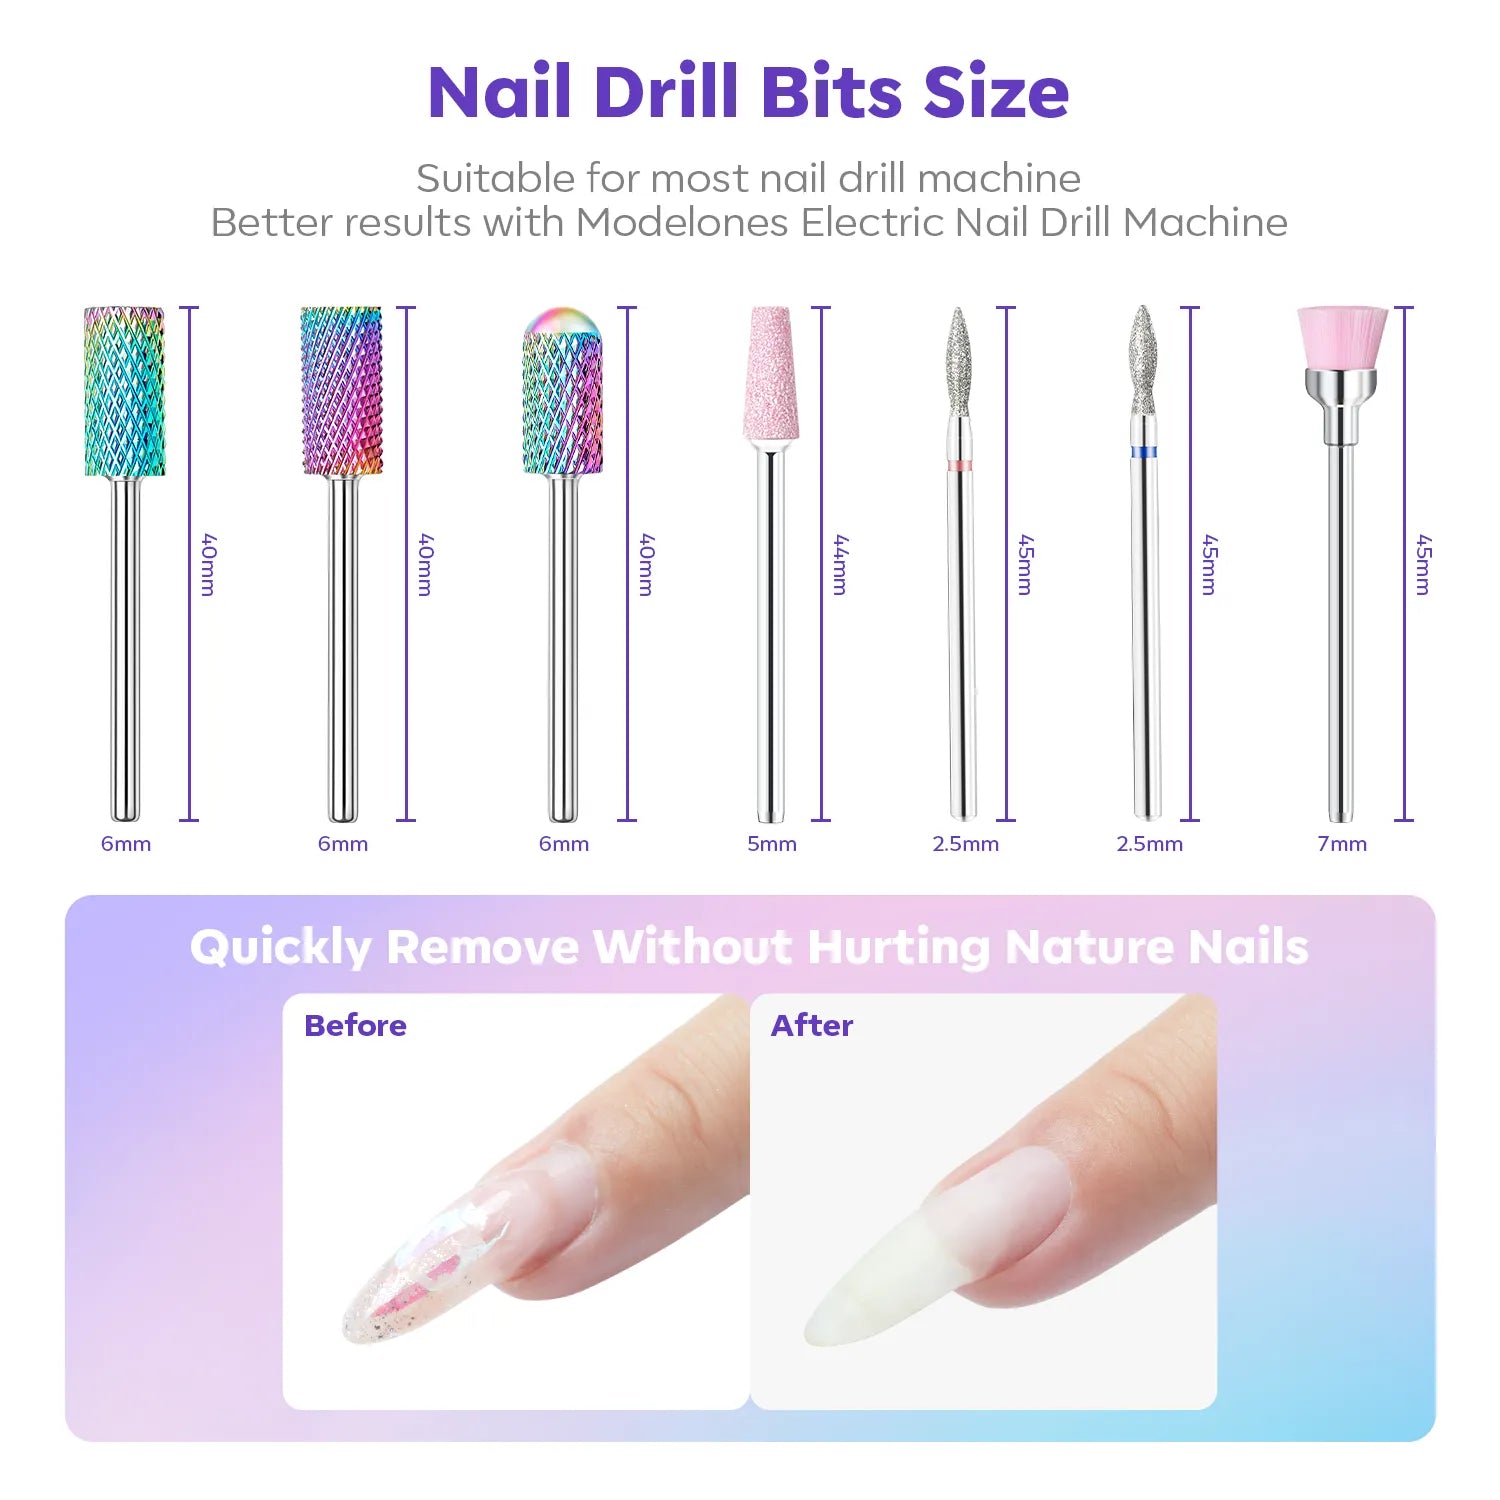 Modelones 7Pcs Professional Nail Drill Bits